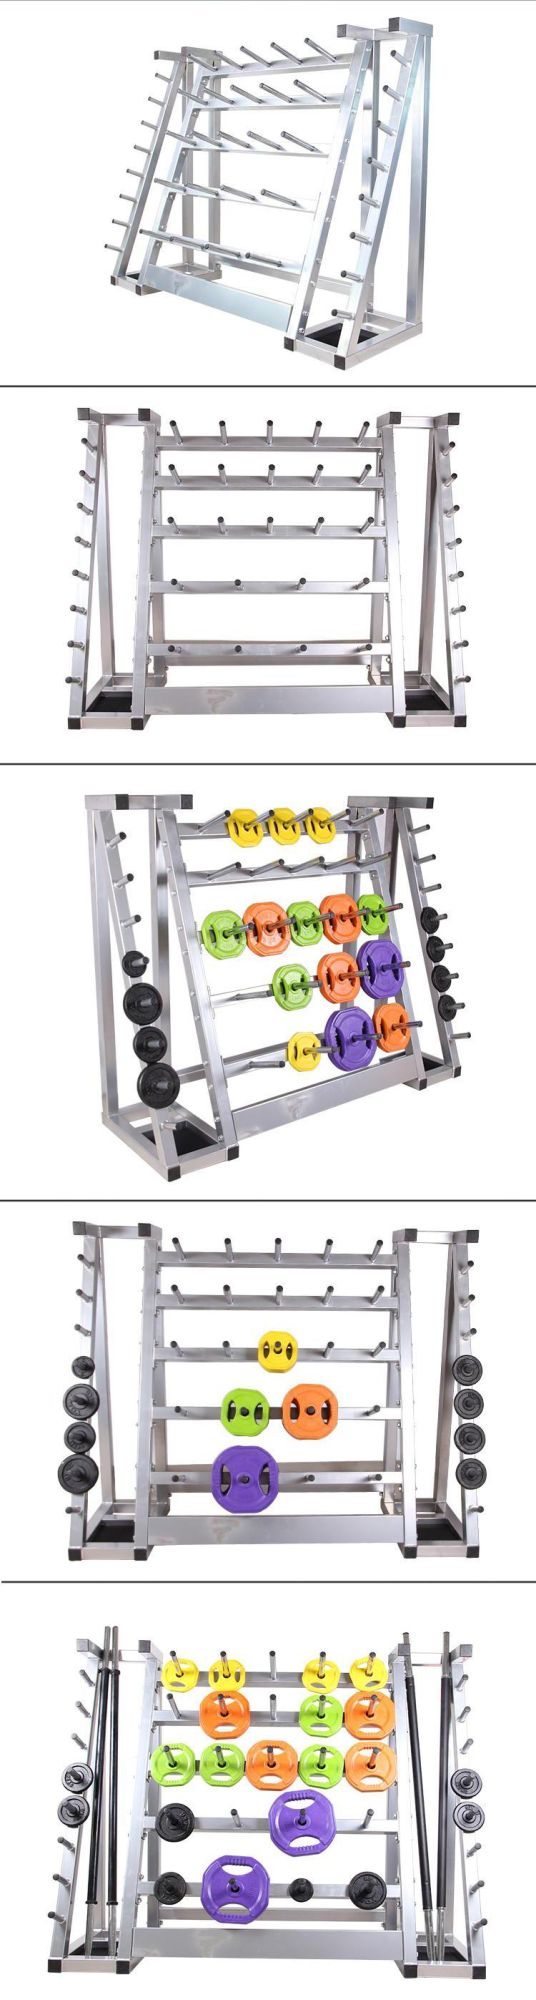 Gym Equipment Storage Rack Barbell Rack